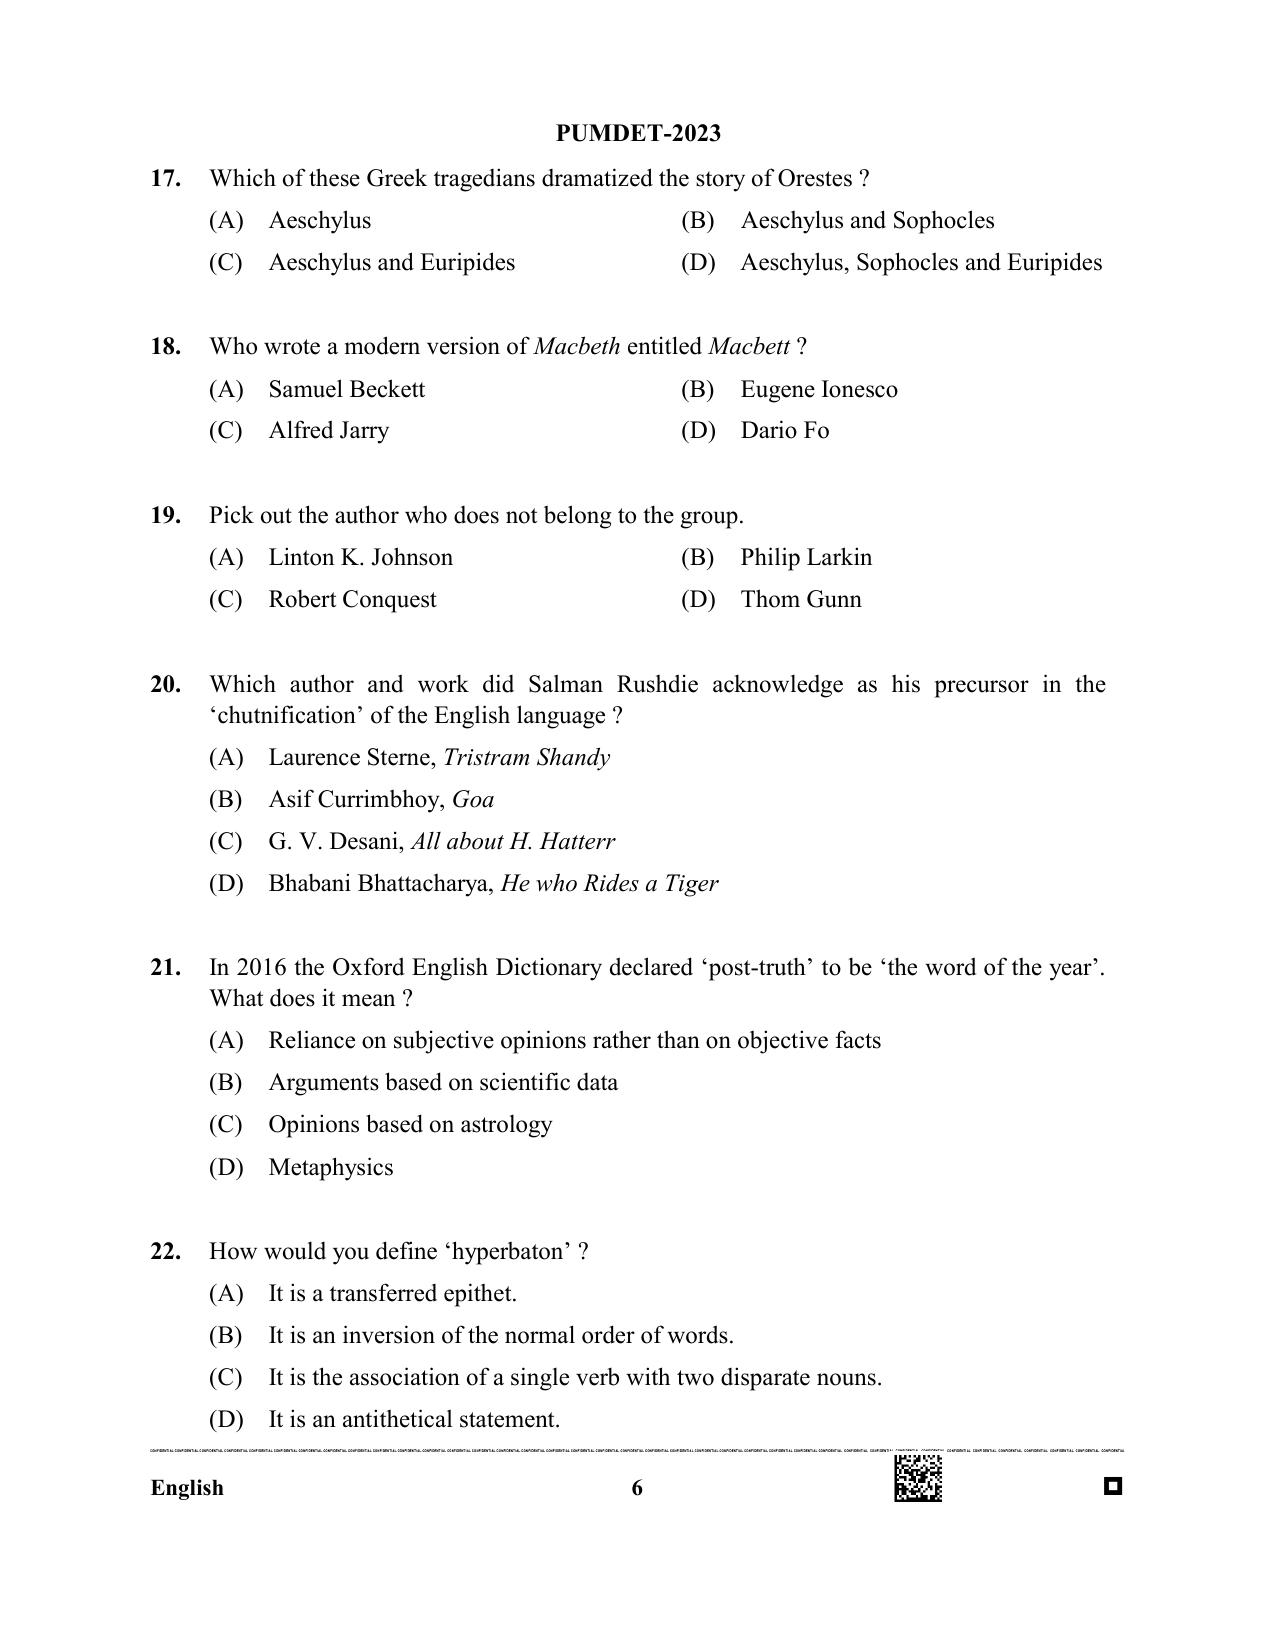 PUBDET 2023 English Question Paper - Page 6